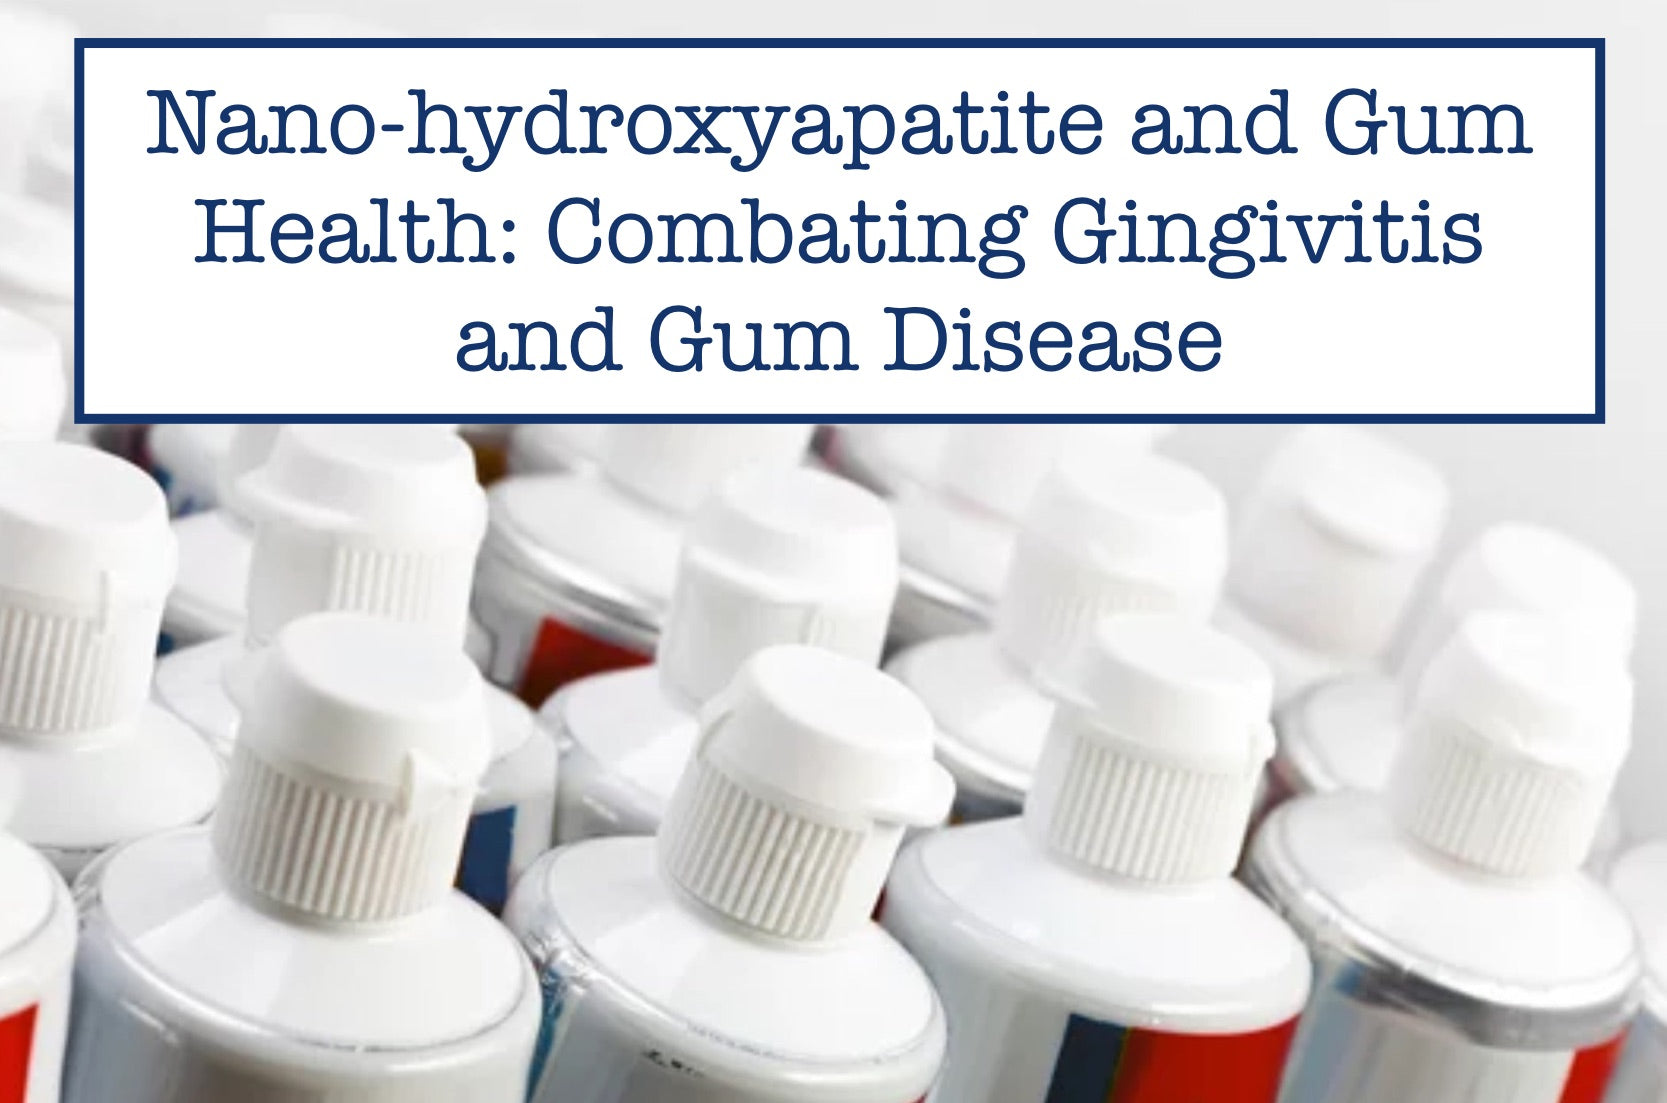 Nano-hydroxyapatite and Gum Health: Combating Gingivitis and Gum Disease